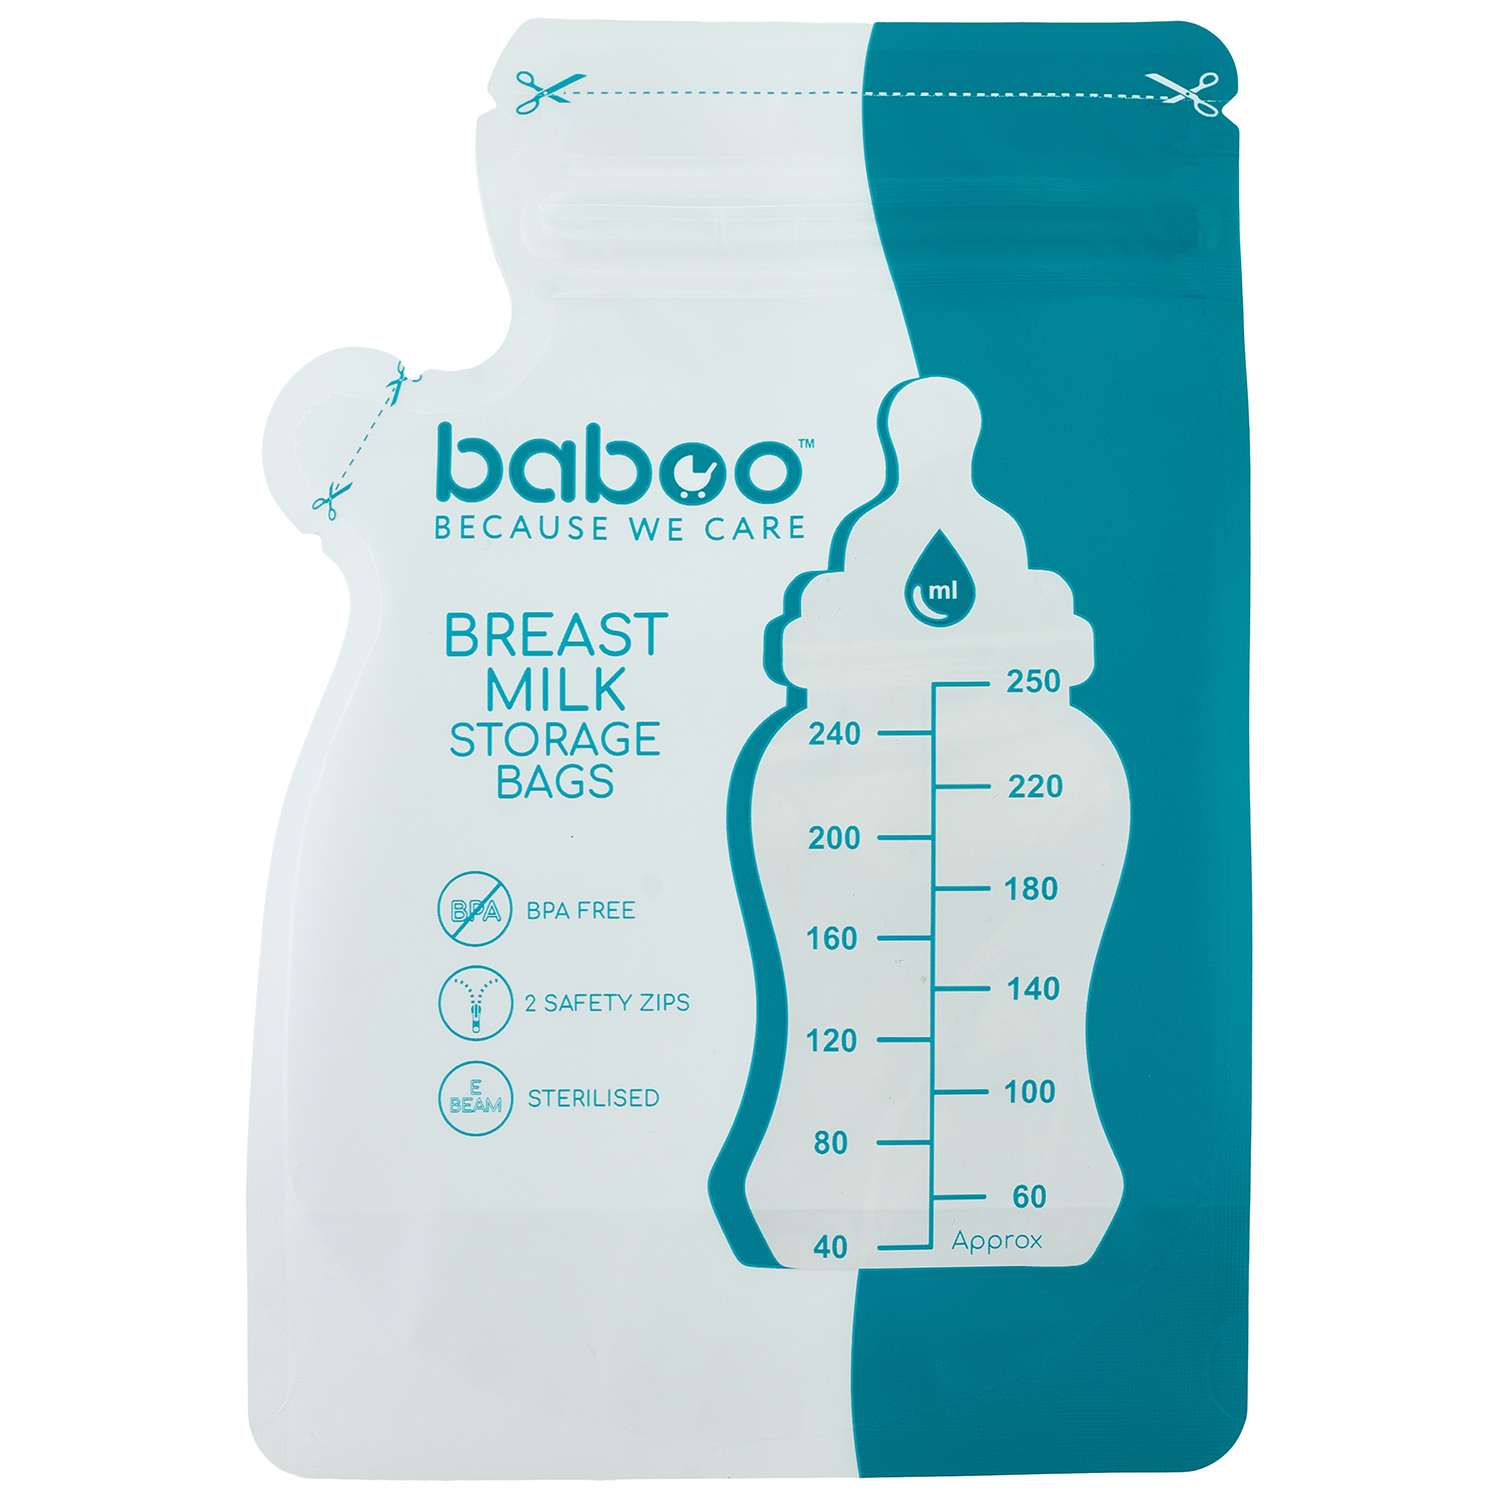 Пакеты для хранения грудного молока BABOO 25шт 2-005 - фото 3